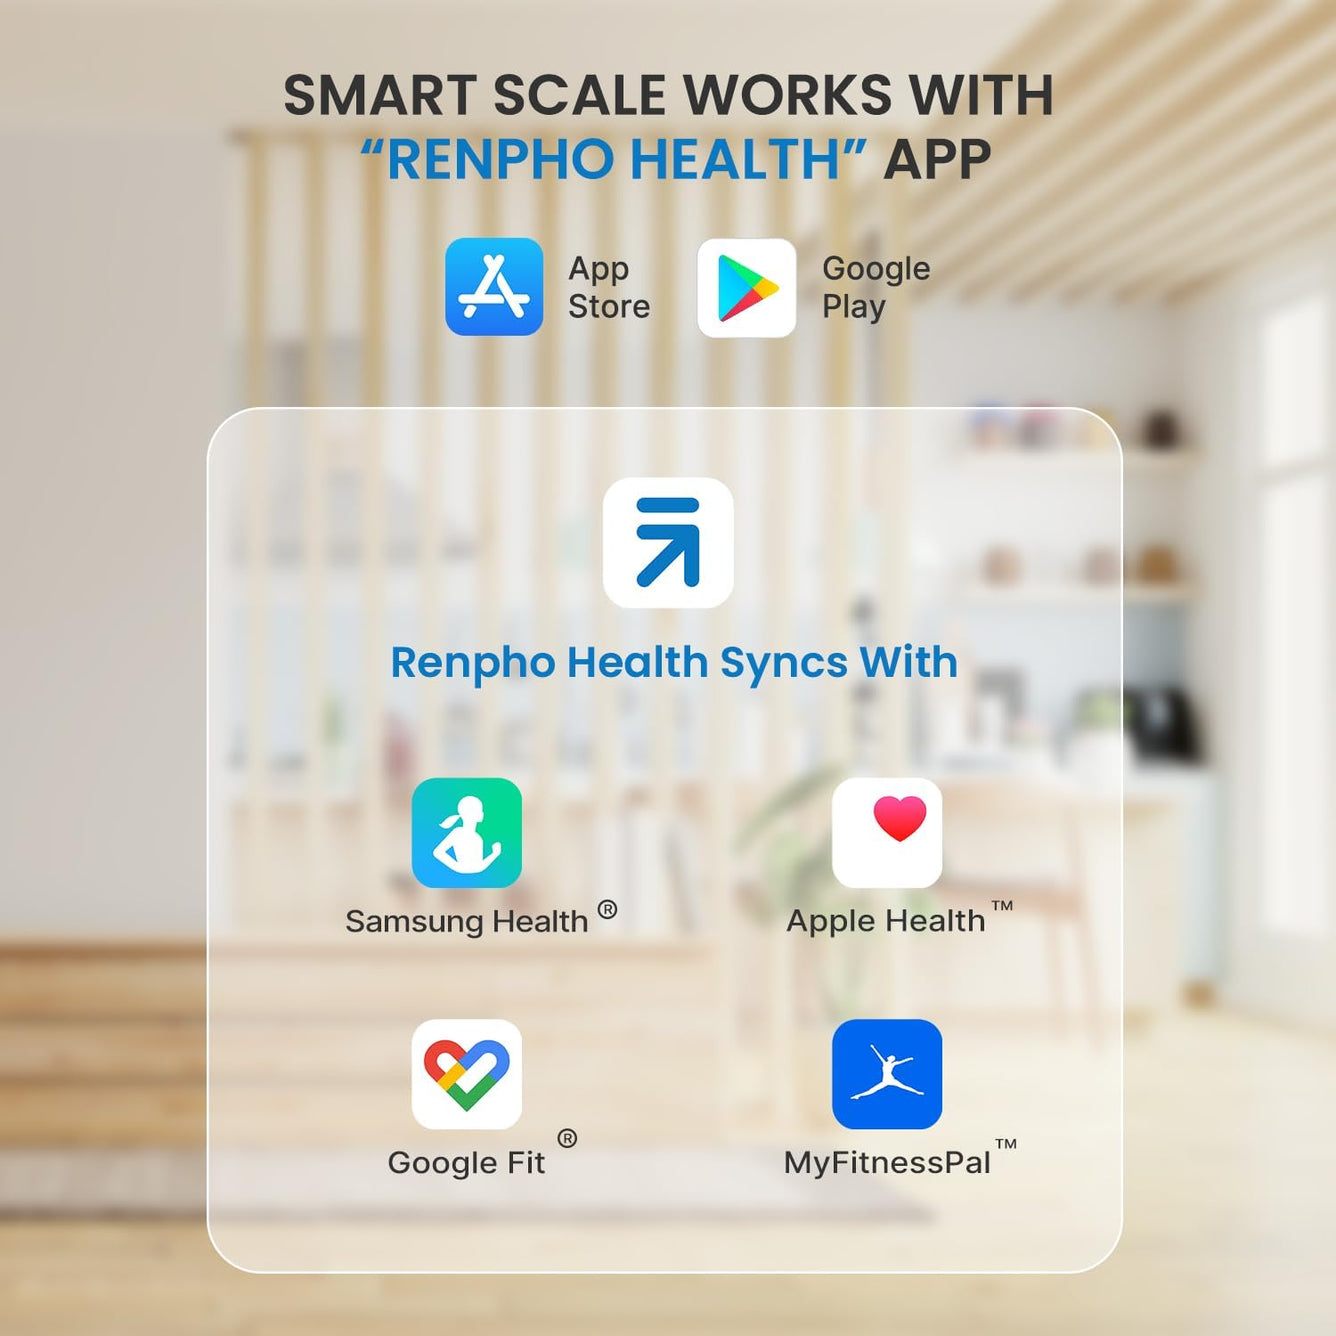  Samsung Health Scale